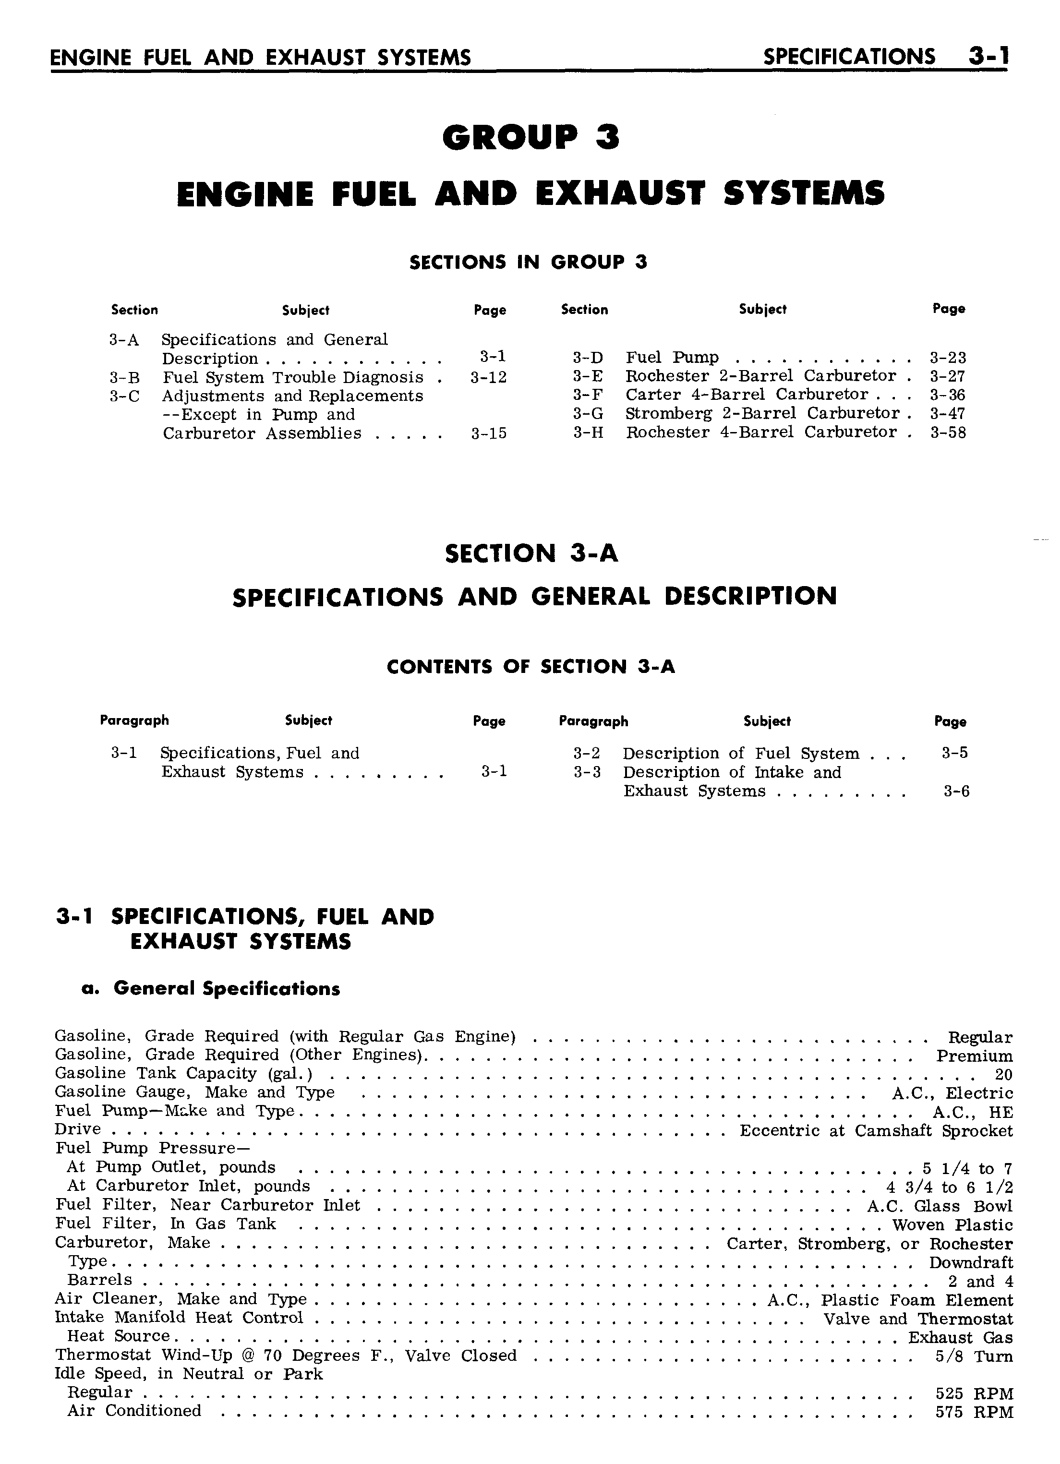 n_04 1961 Buick Shop Manual - Engine Fuel & Exhaust-001-001.jpg